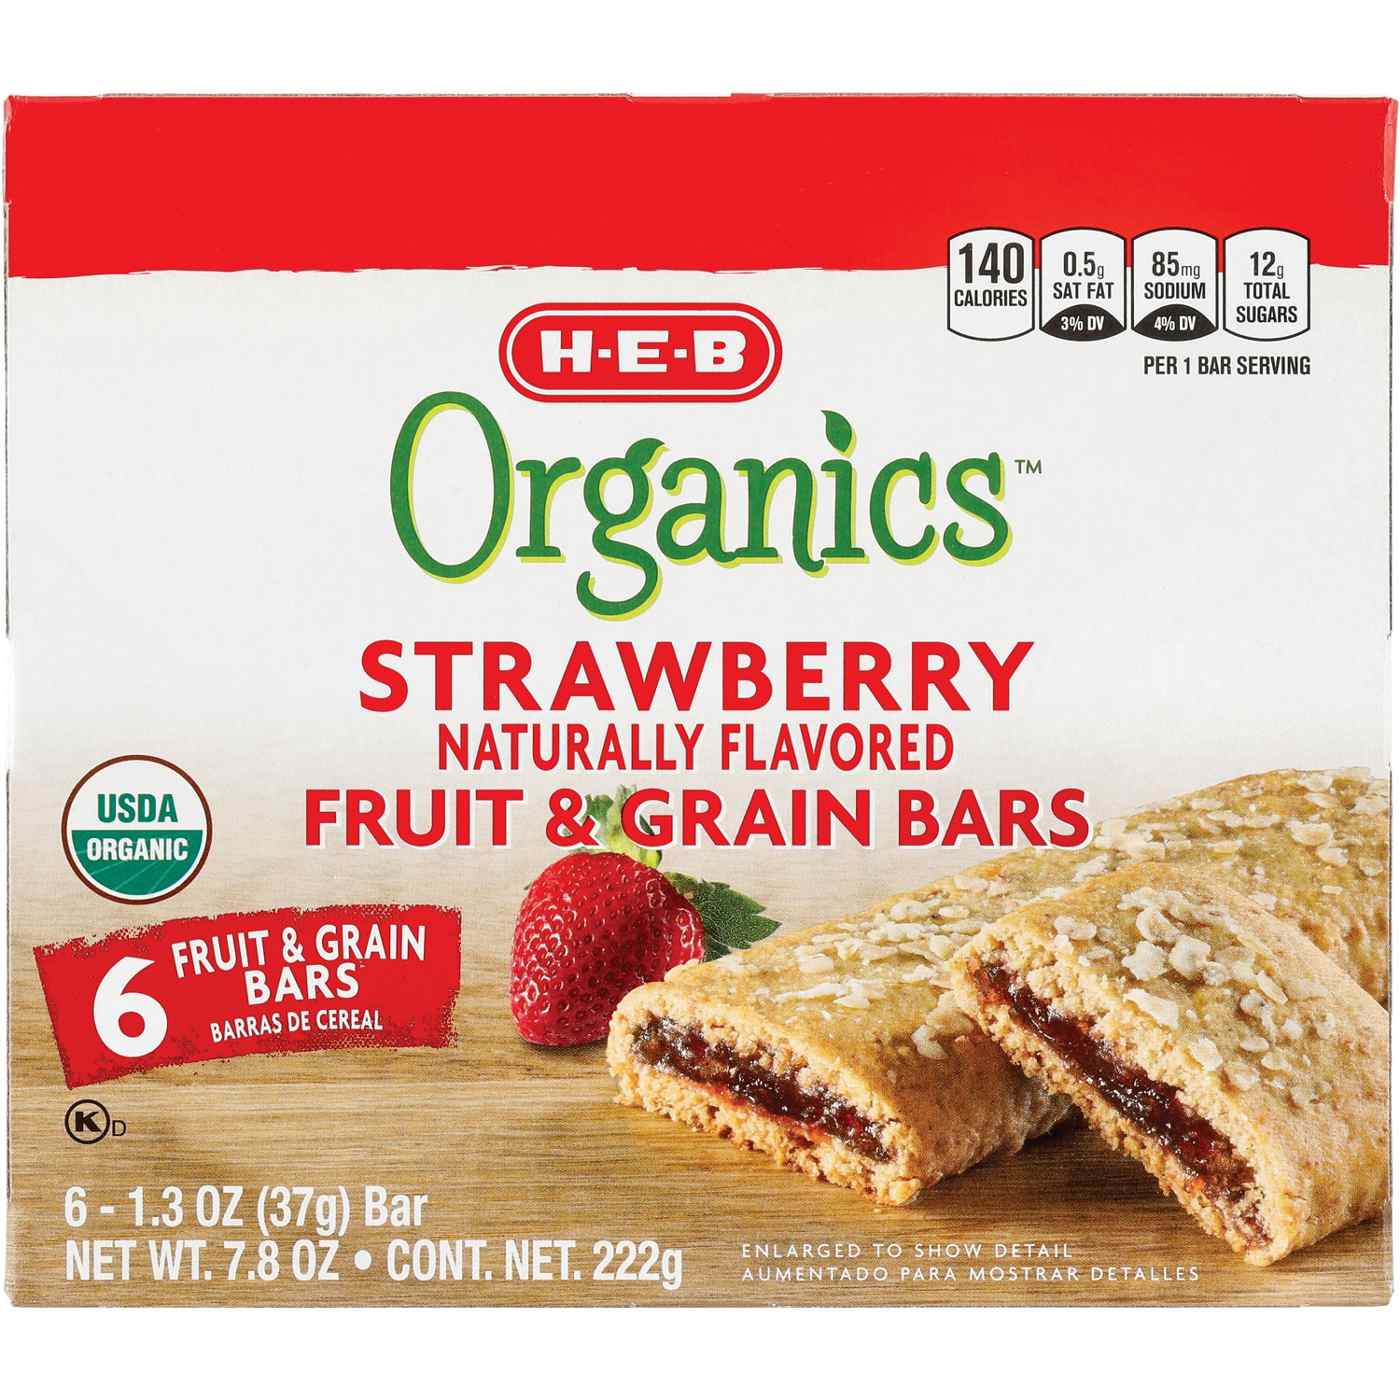 H-E-B Organics Fruit & Grain Bars - Strawberry; image 1 of 2